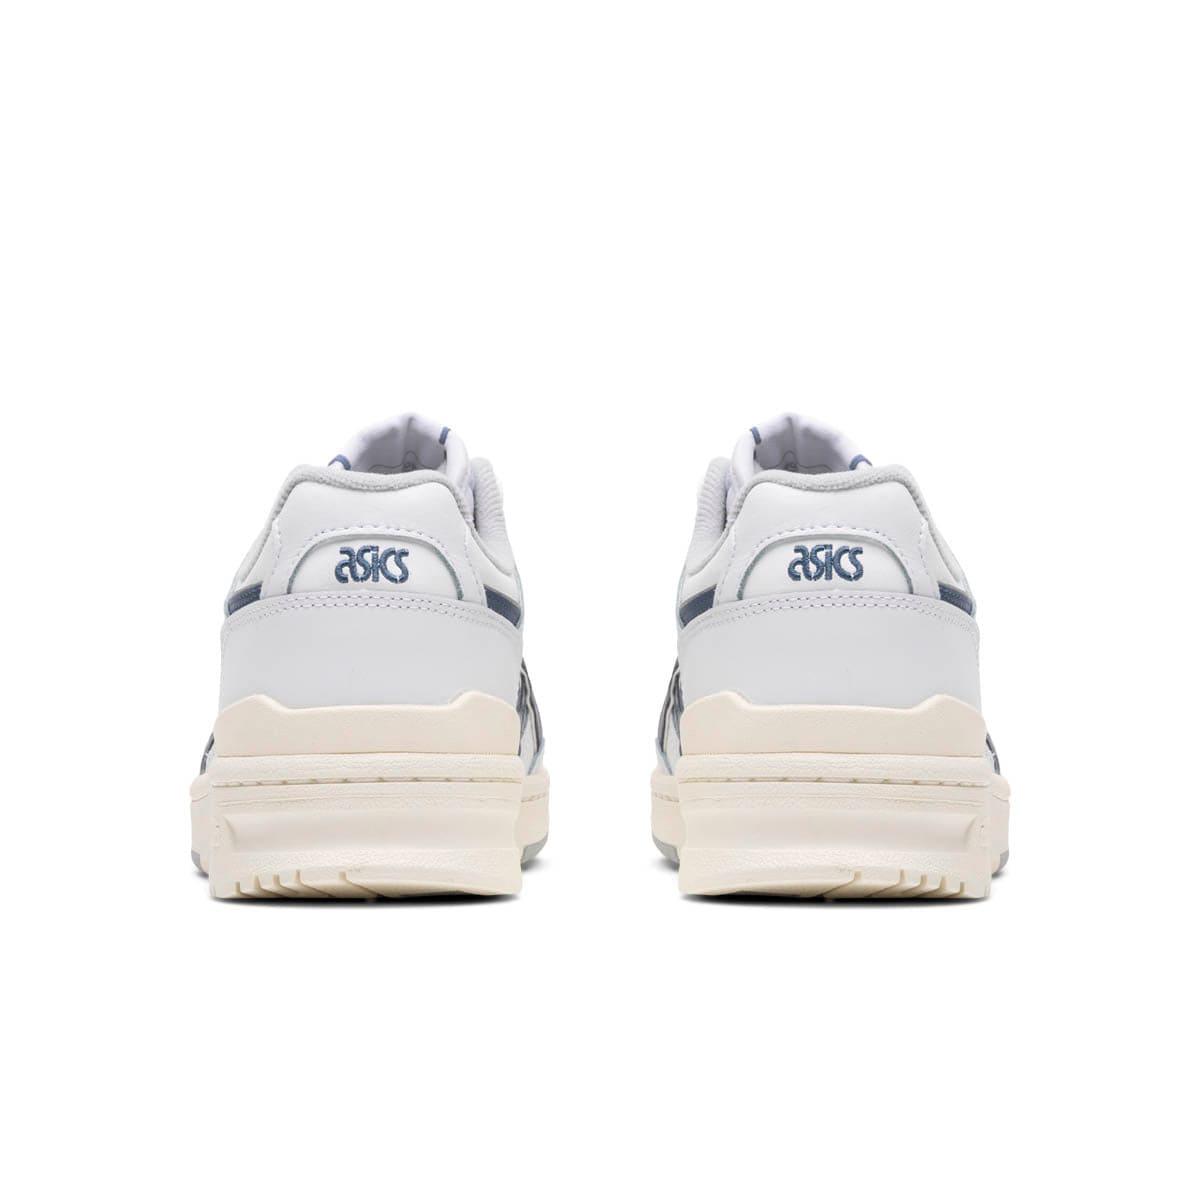 Asics Sneakers EX89